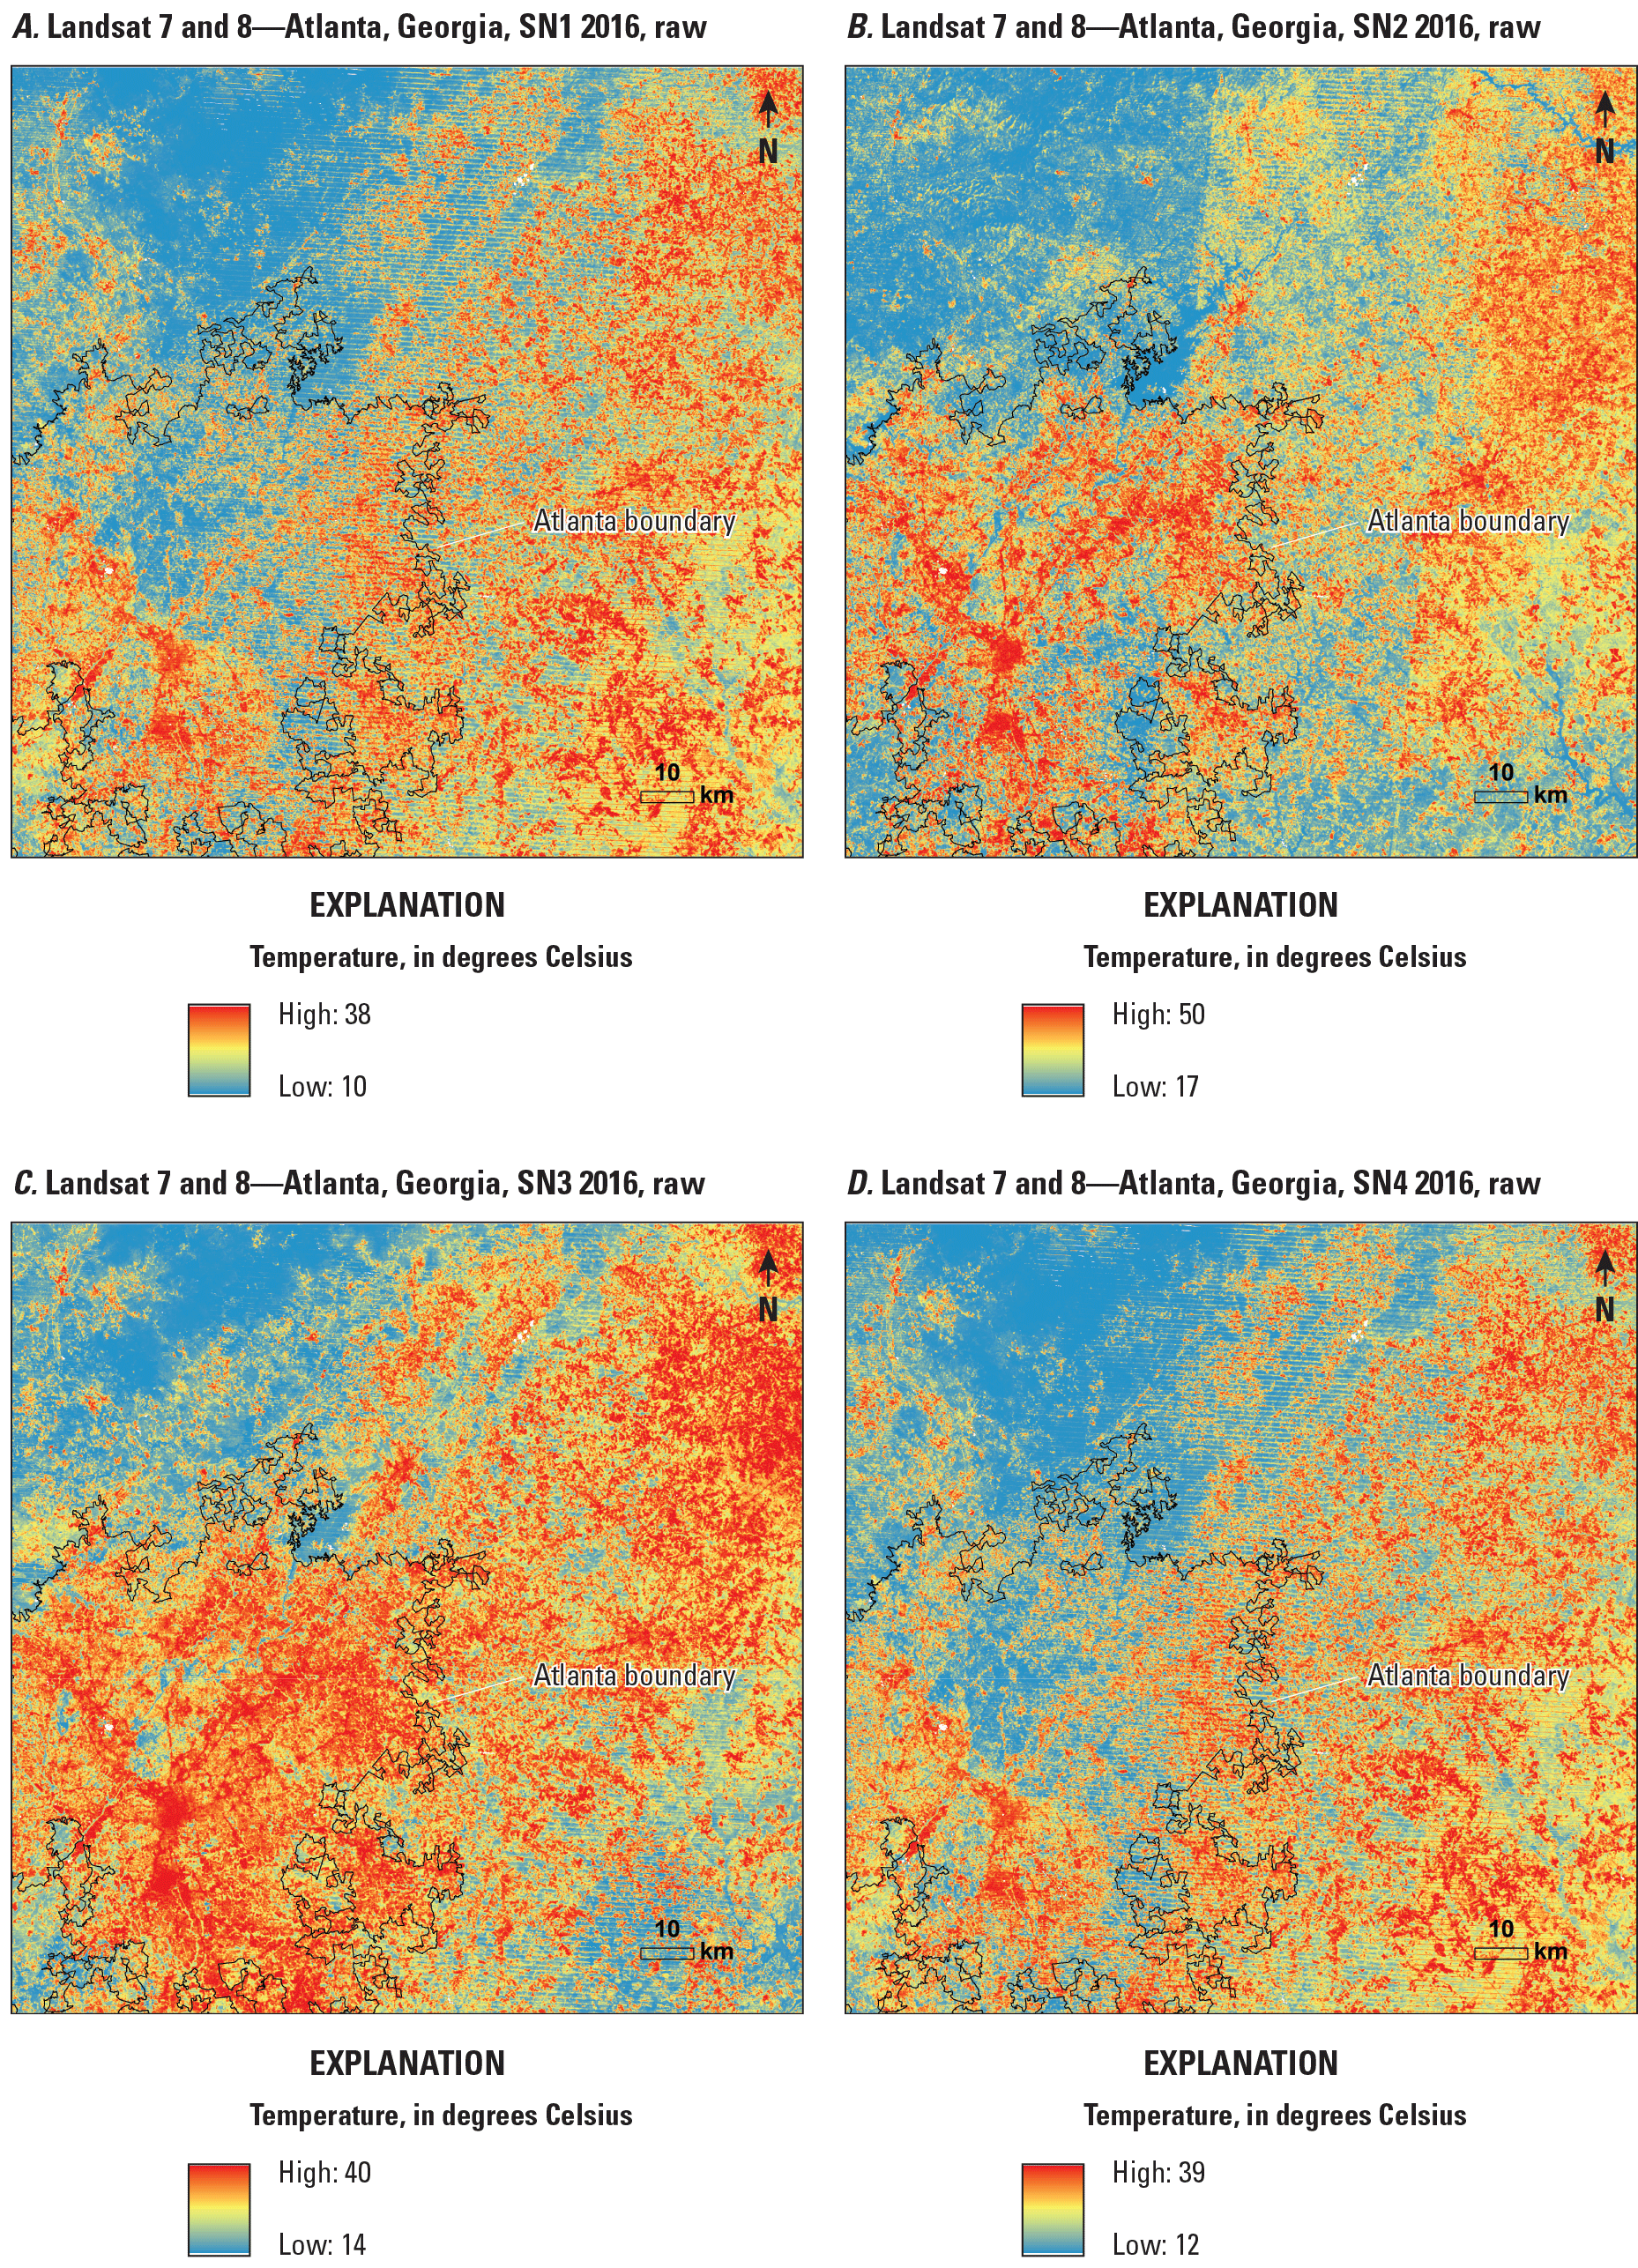 Seasonal means of Landsat surface temperature without gap-filling in Atlanta, Georgia,
                        2016.